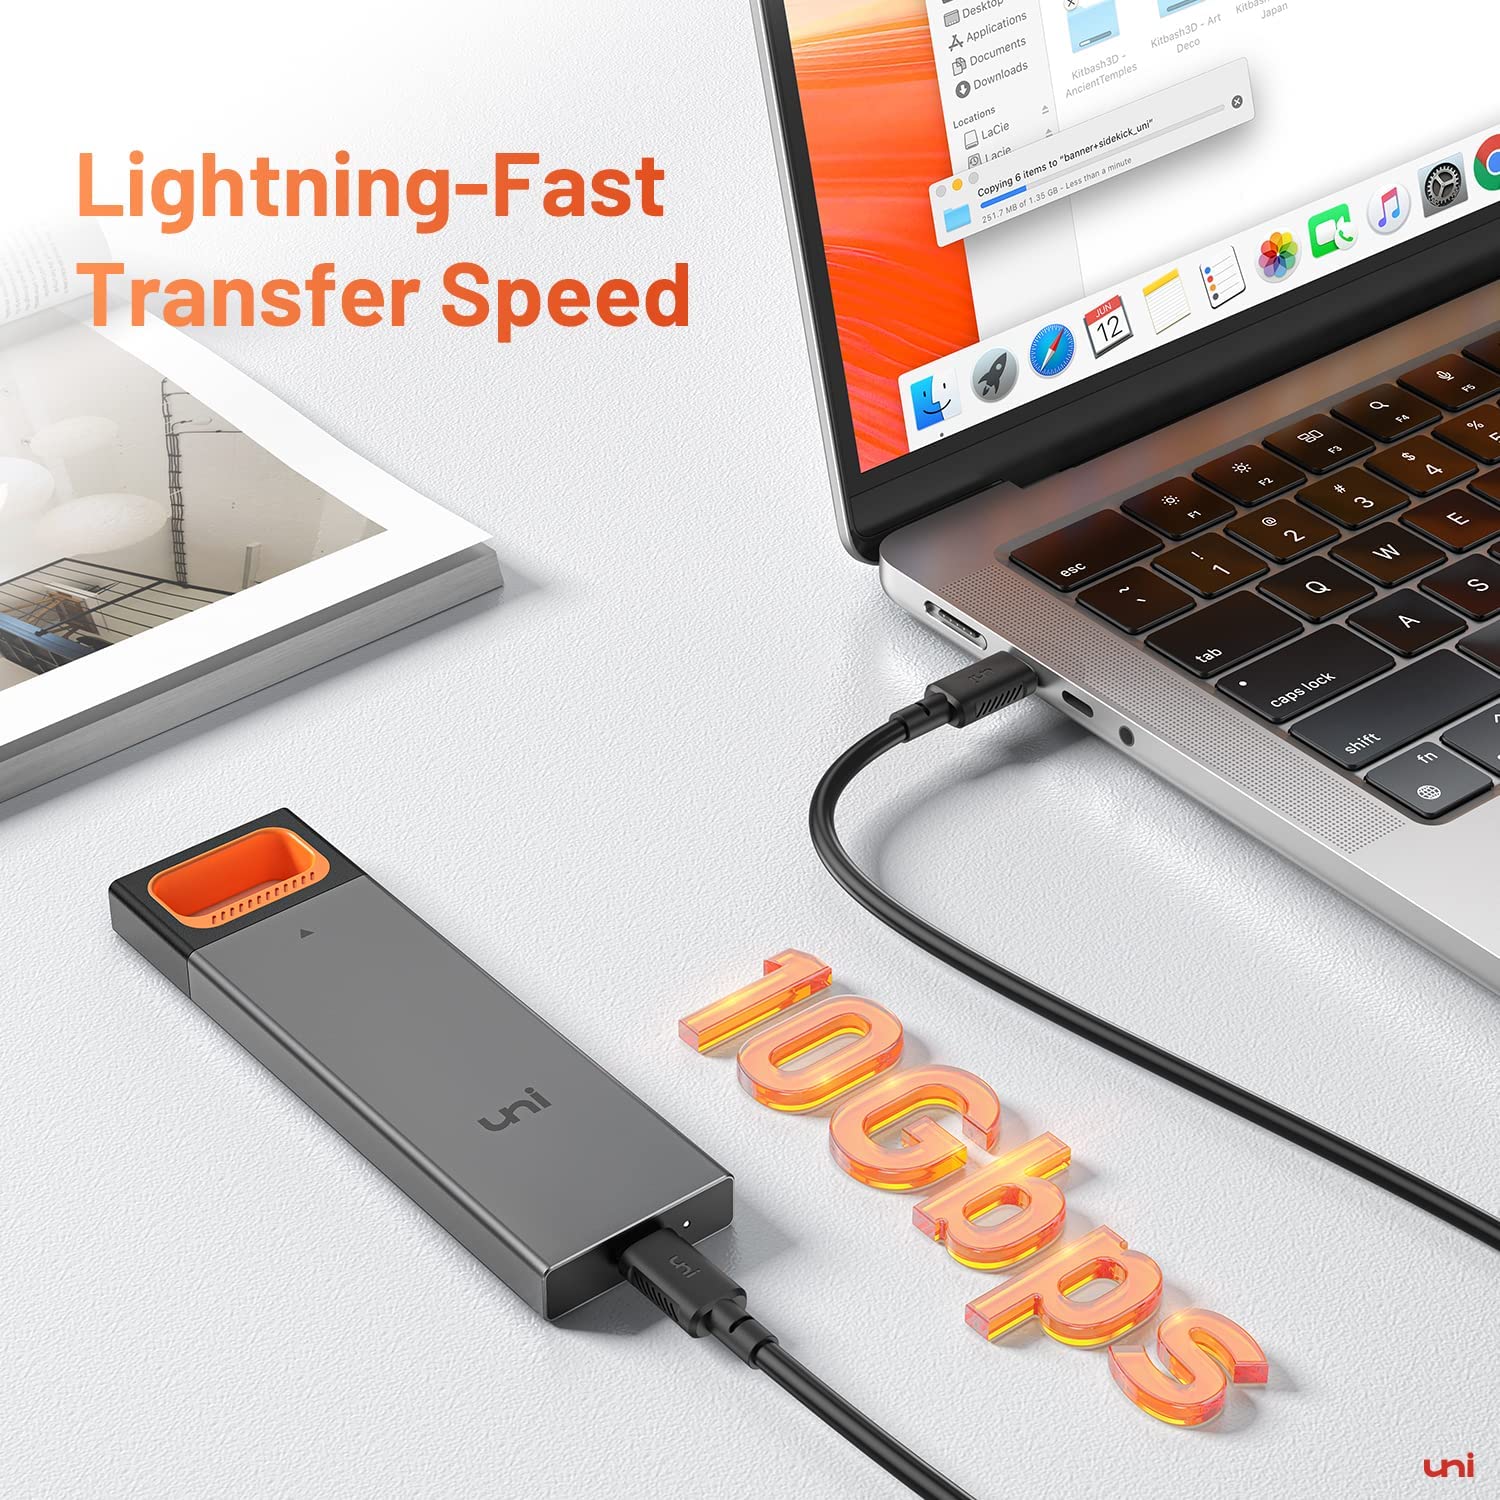 M.2 SSD Enclosure (Tool Free) Lightning-Fast Transfer Speed